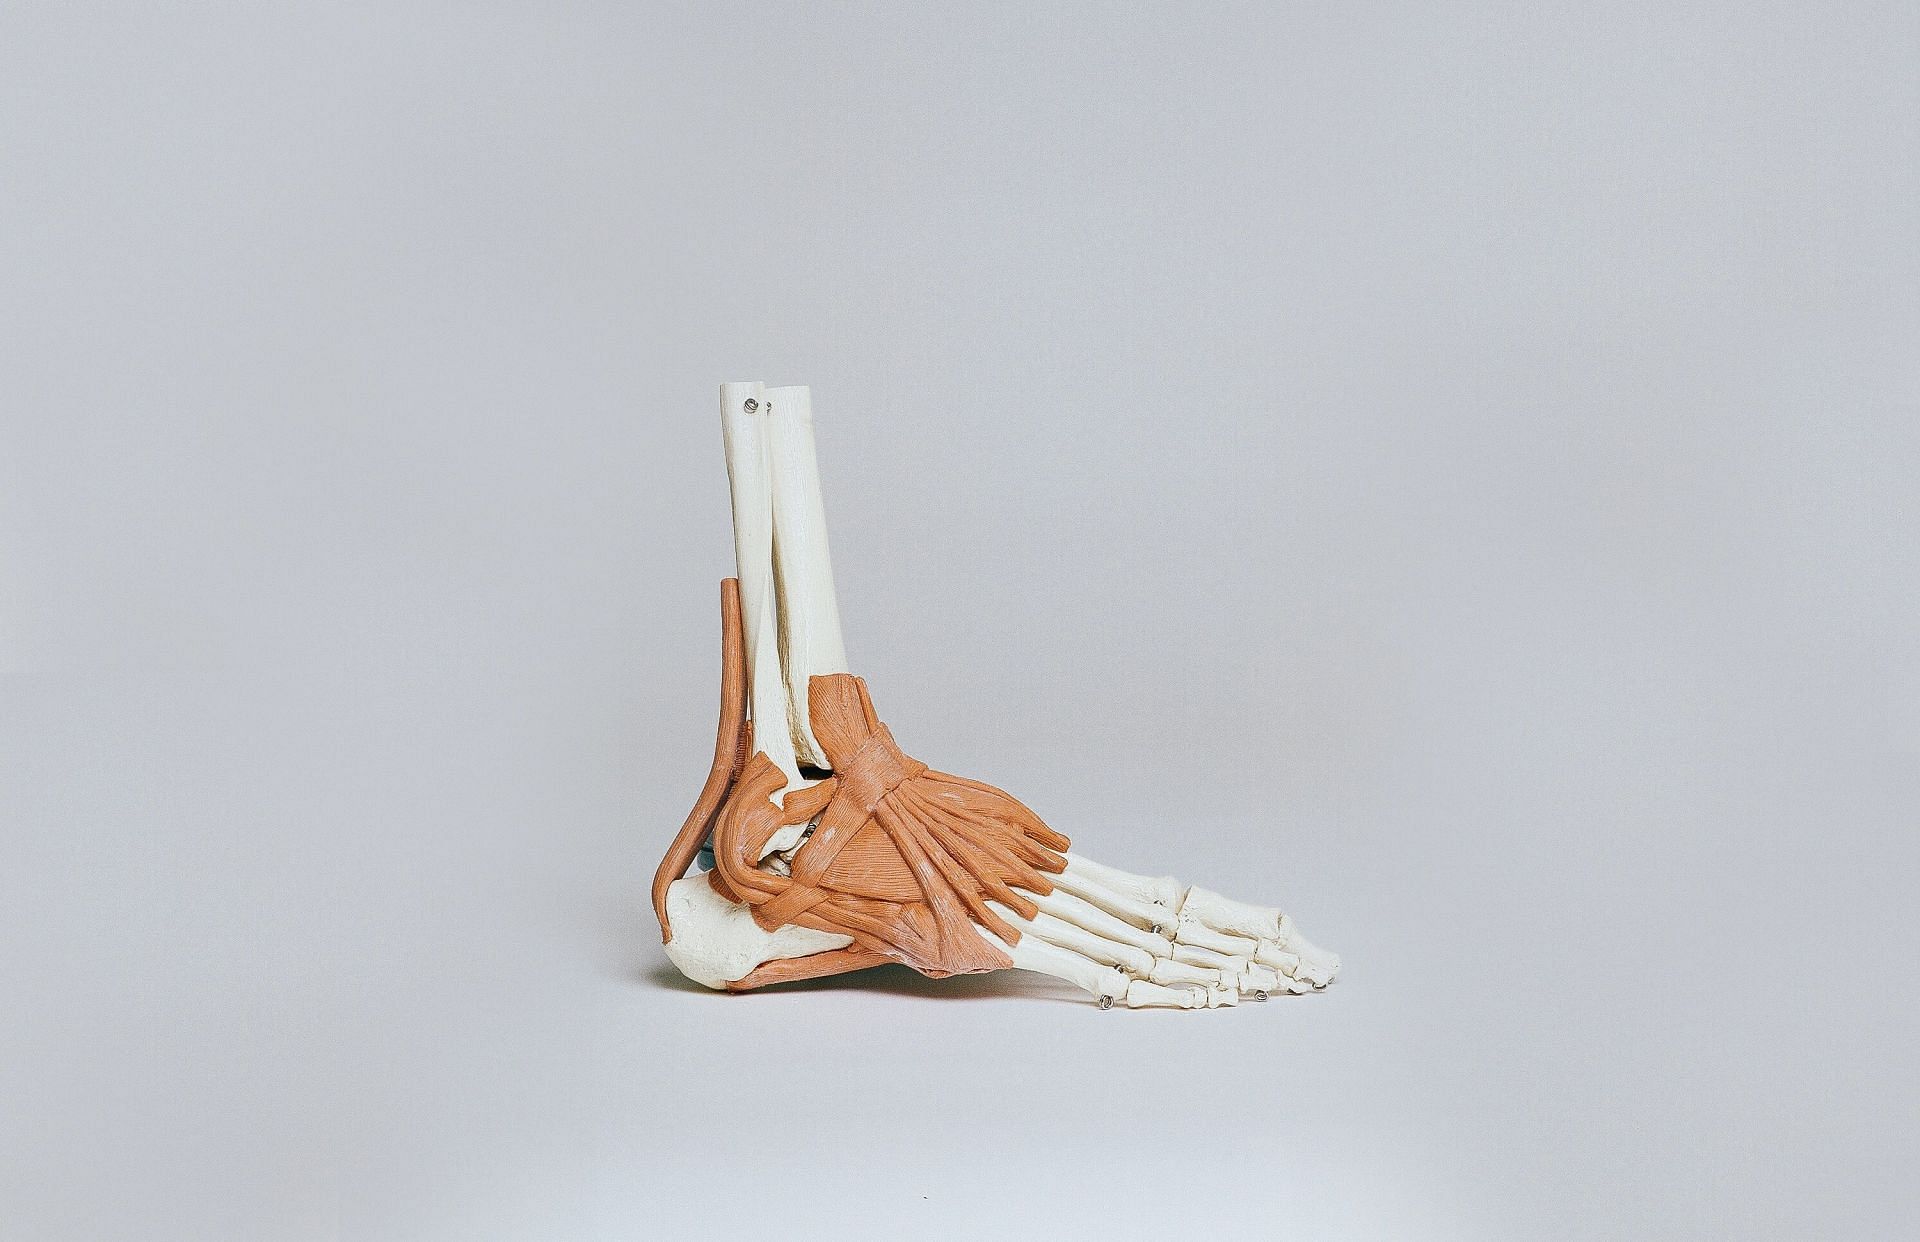 Specifically designed for foot injury (Image via Unsplash/Nino Liverani)